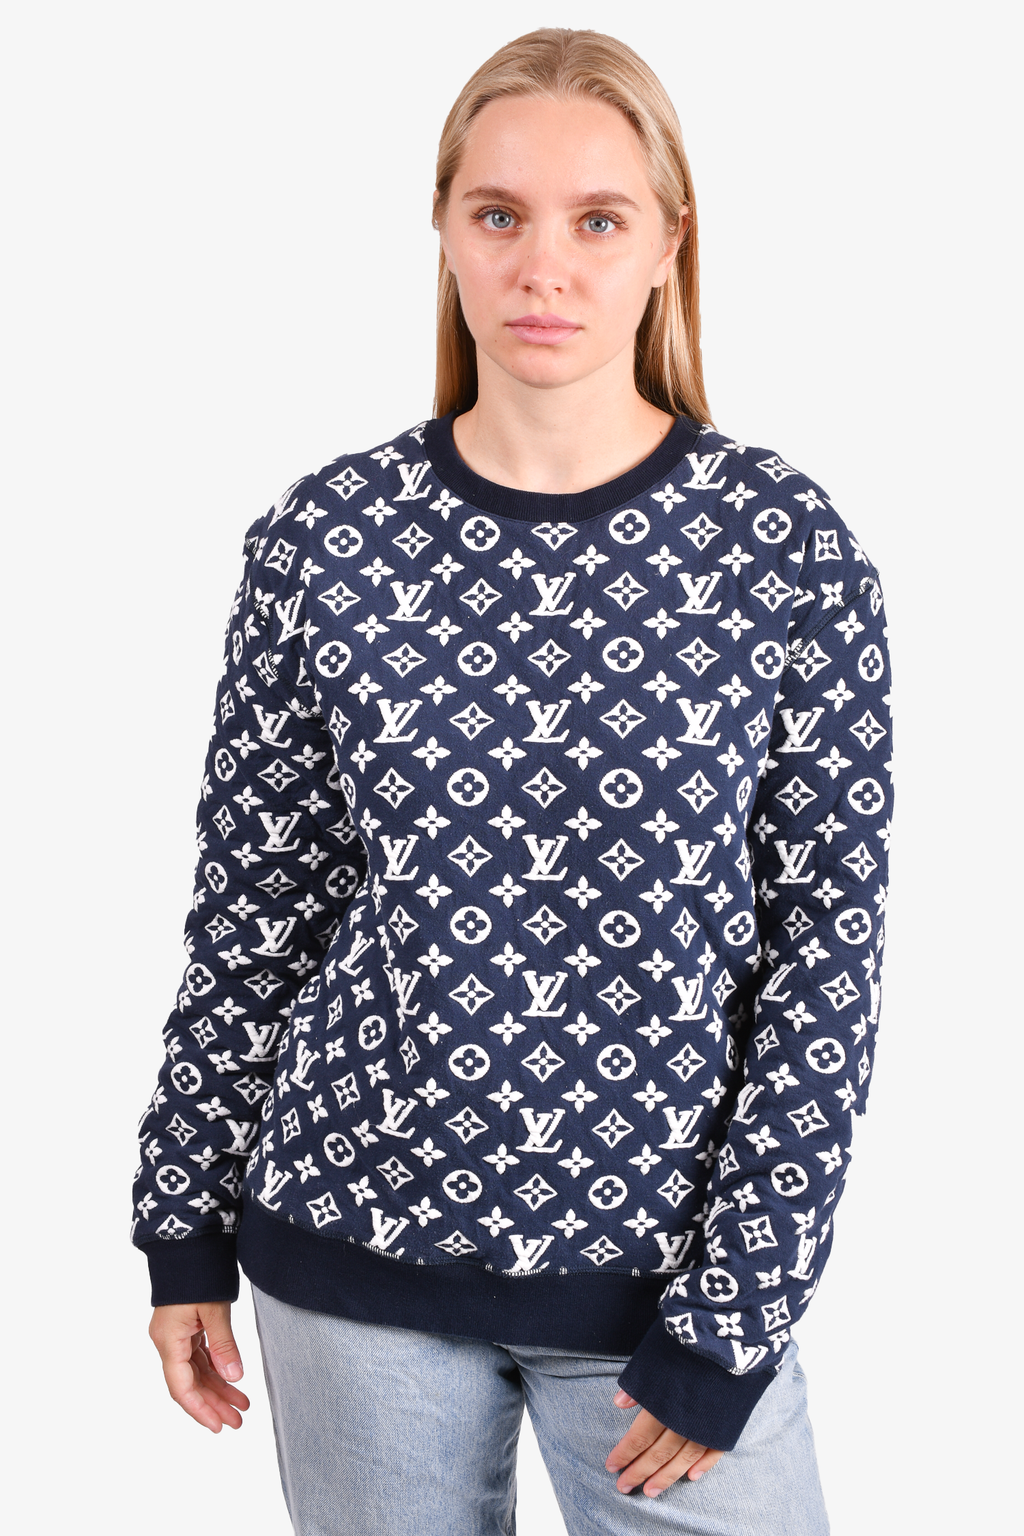 Louis Vuitton Navy/White Monogram Sweater Size L